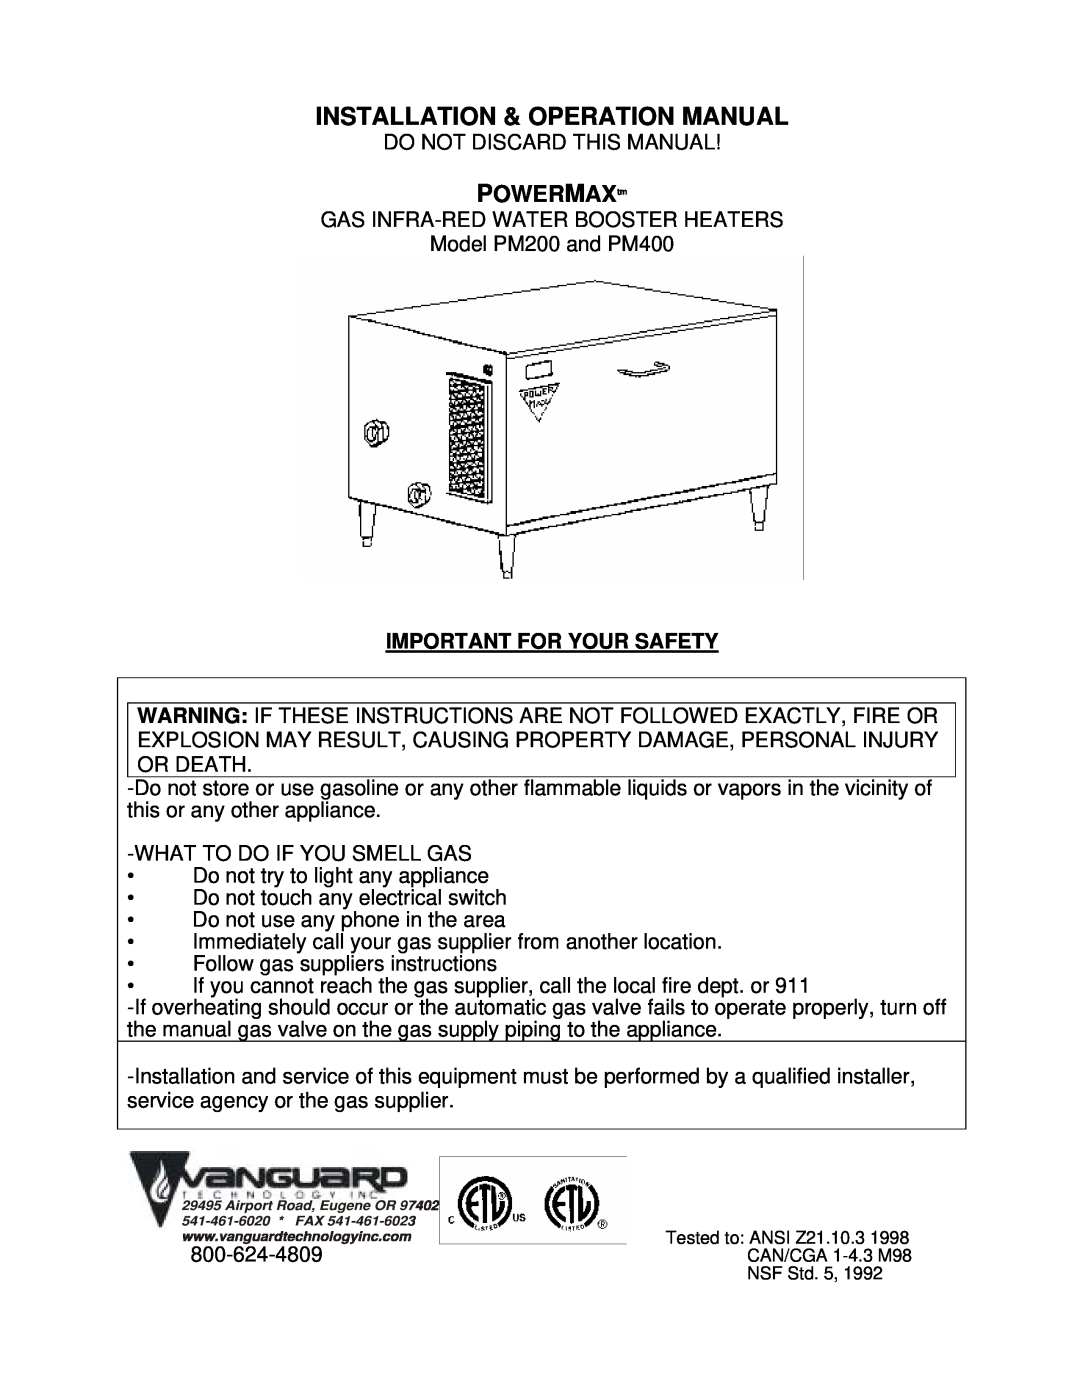 Vanguard Heating PM400, PM200 operation manual POWERMAXtm 